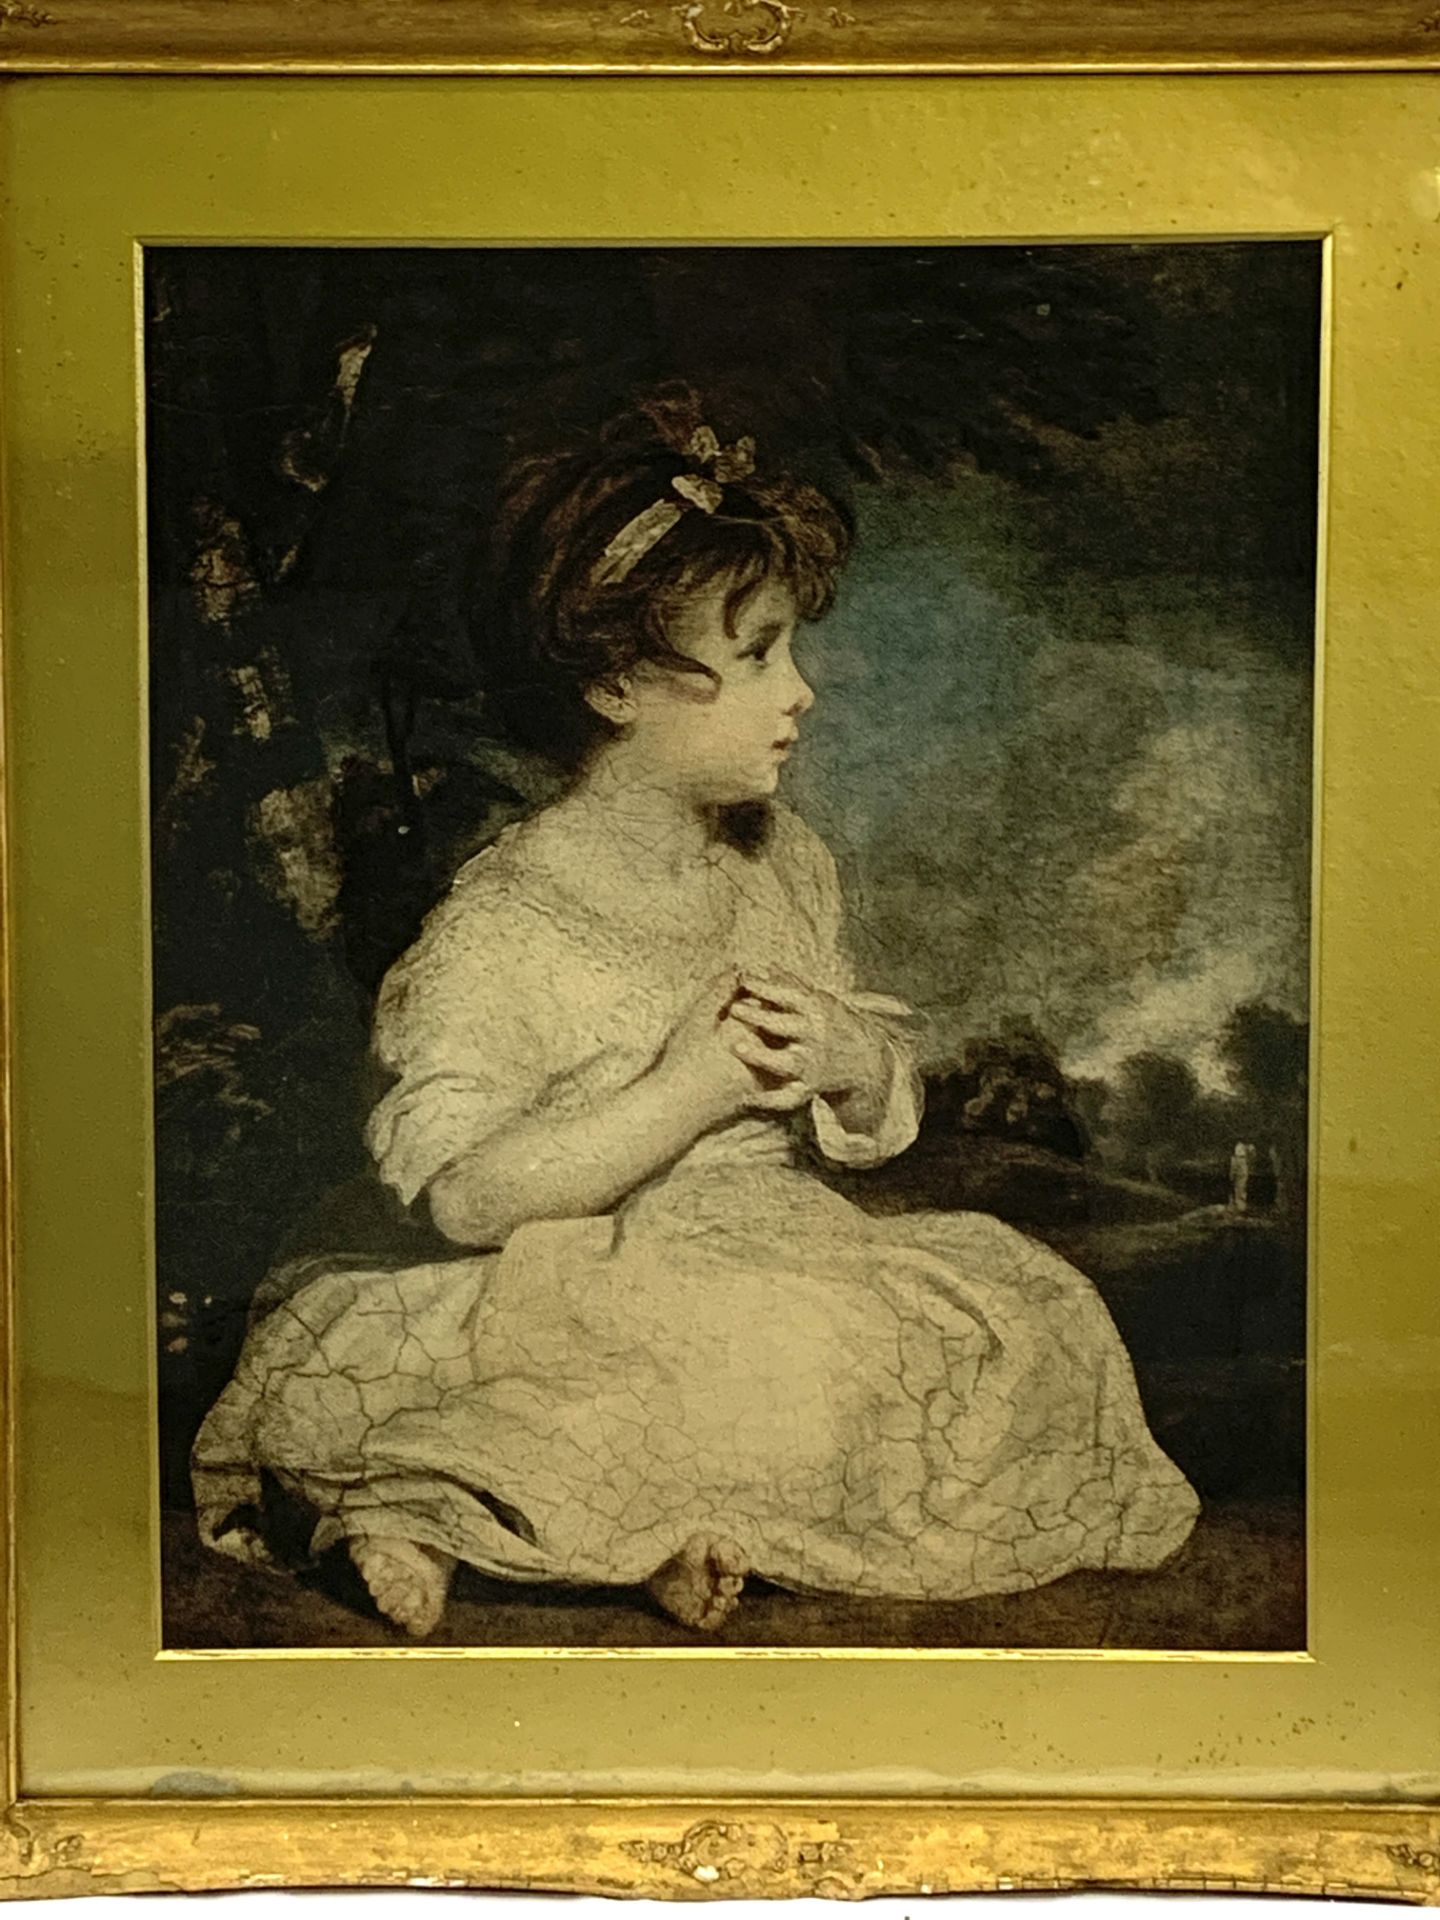 Gilt framed print of a girl sitting in a landscape